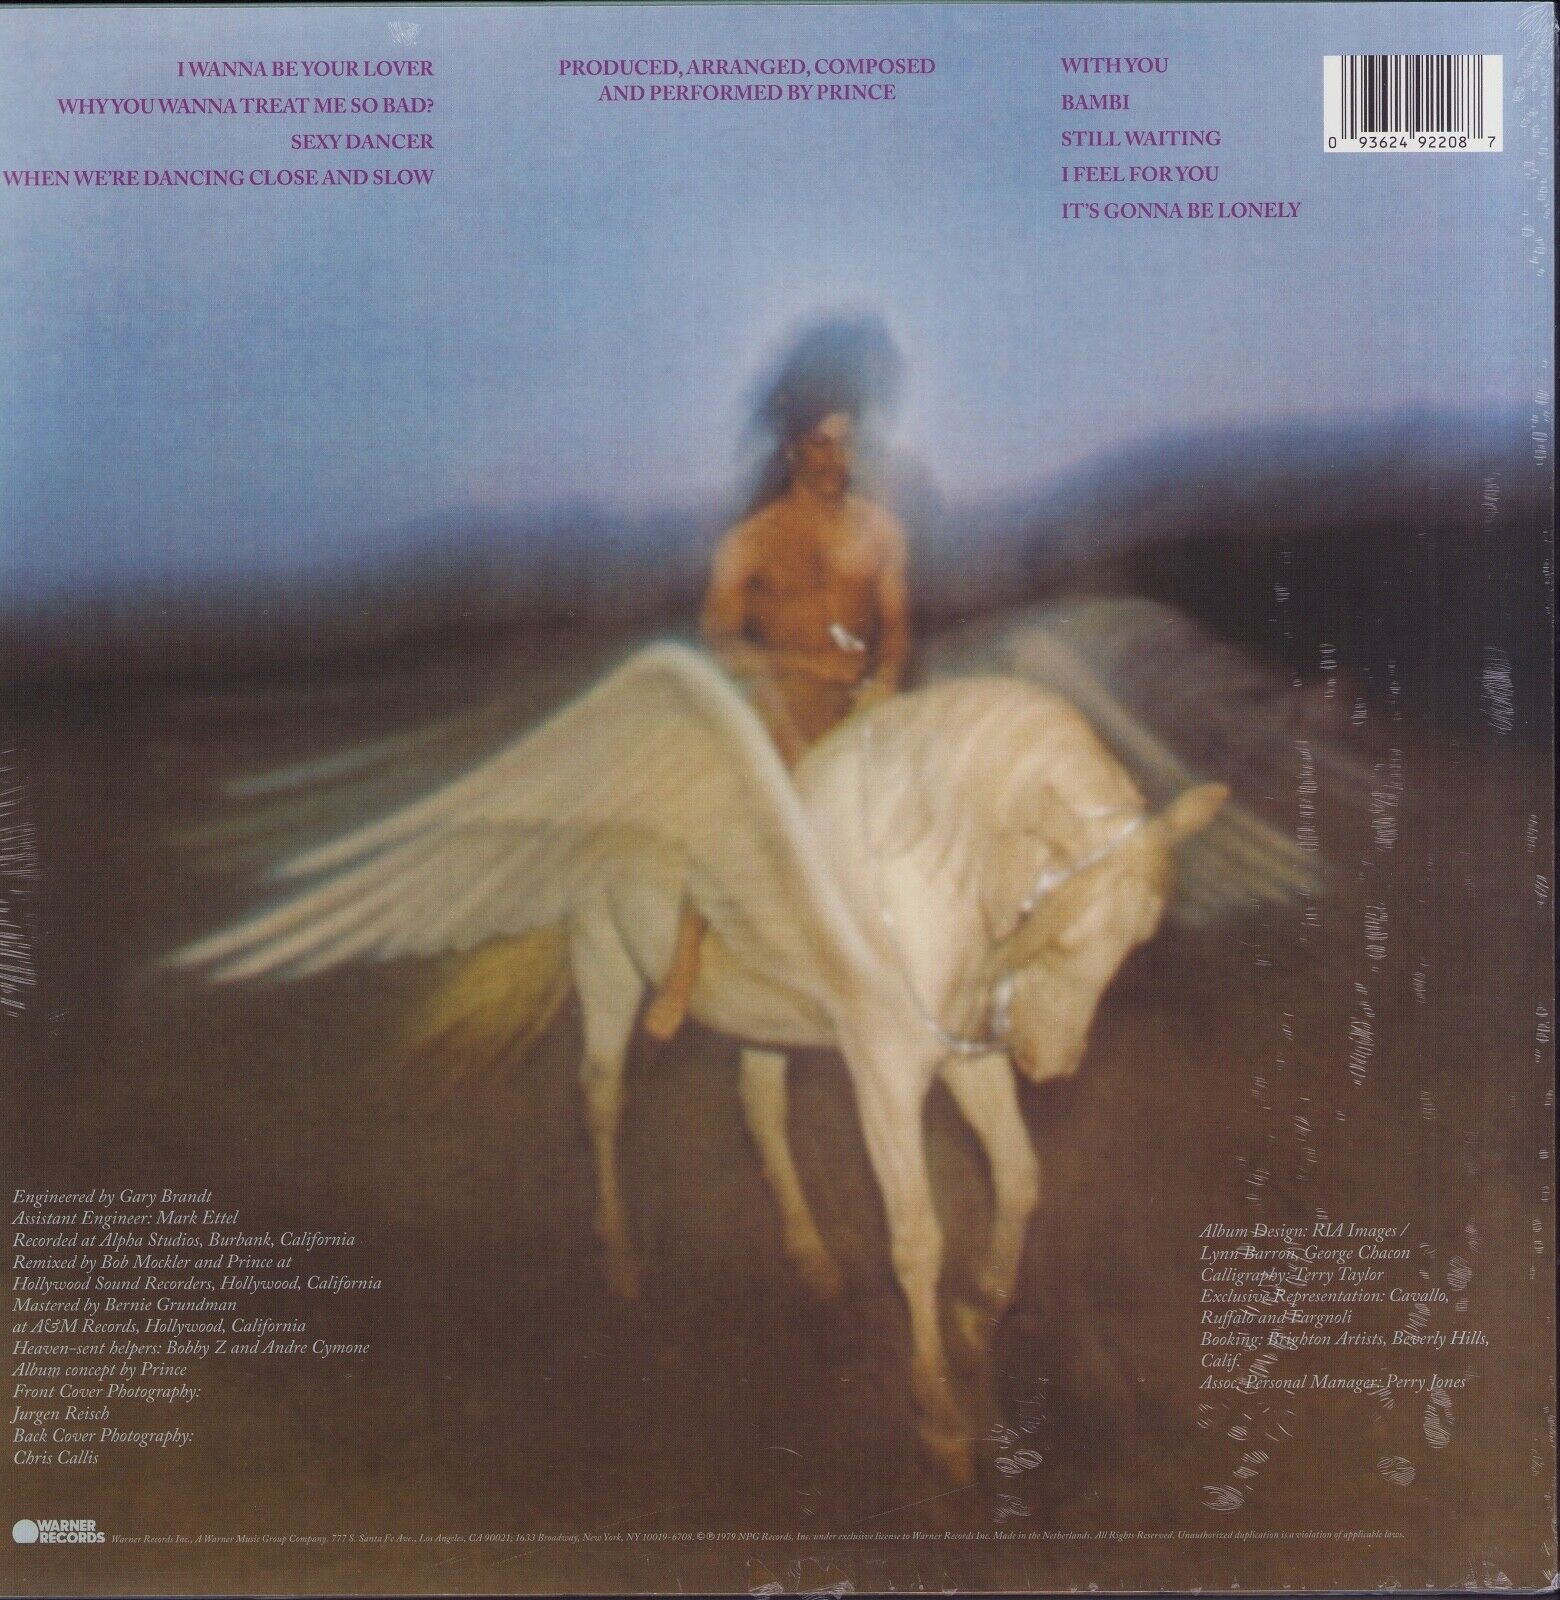 Prince - Prince Vinyl LP - EU 2020